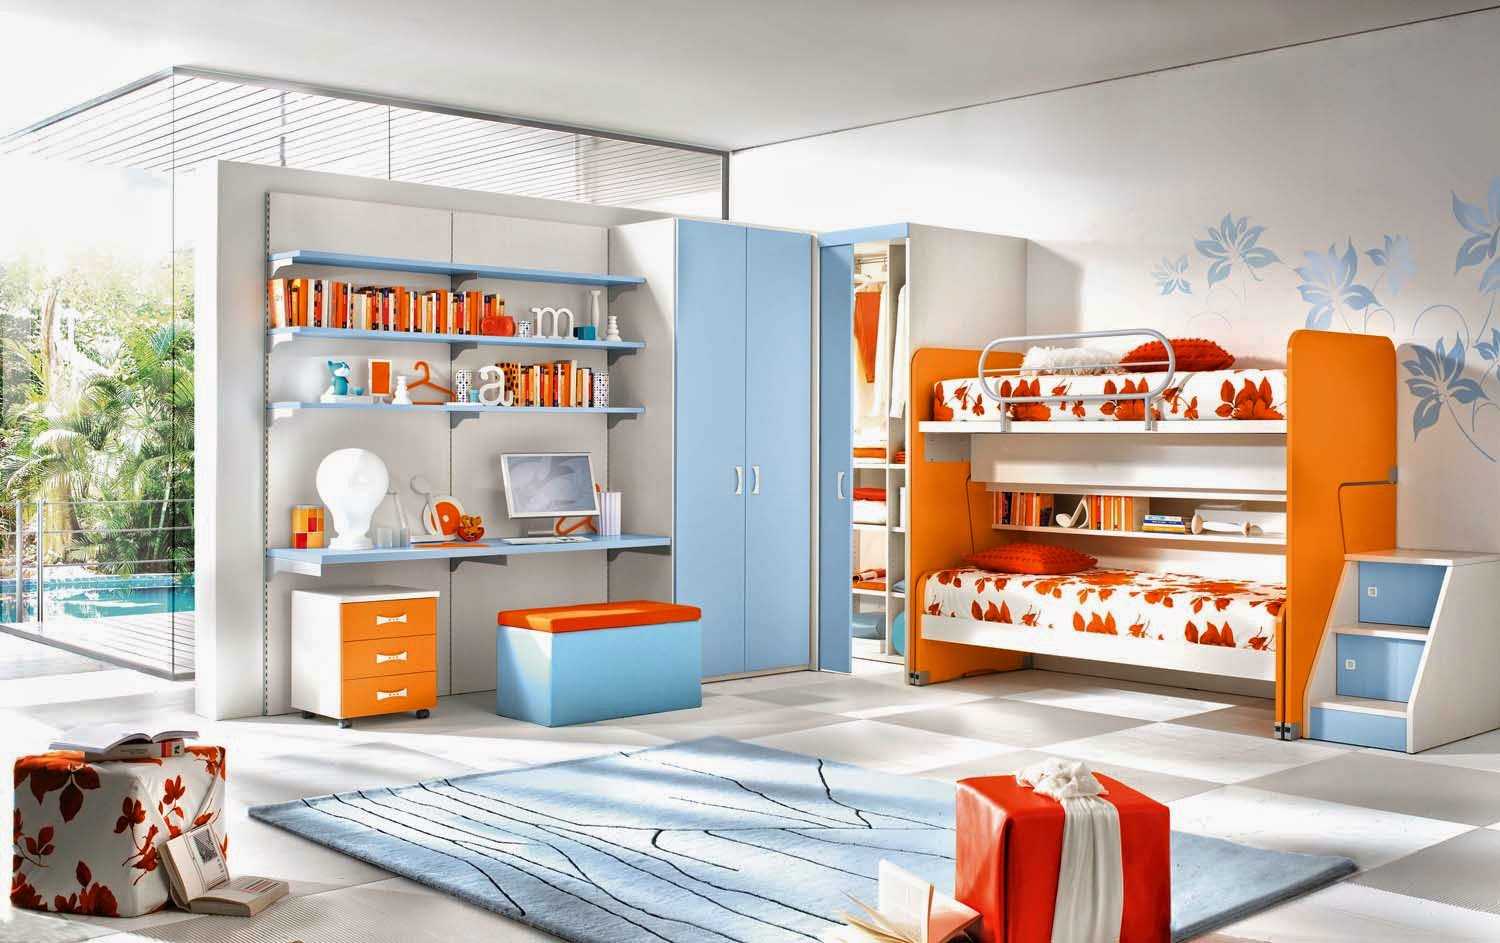 kombinacija tamno narančaste boje u stilu sobe s drugim bojama